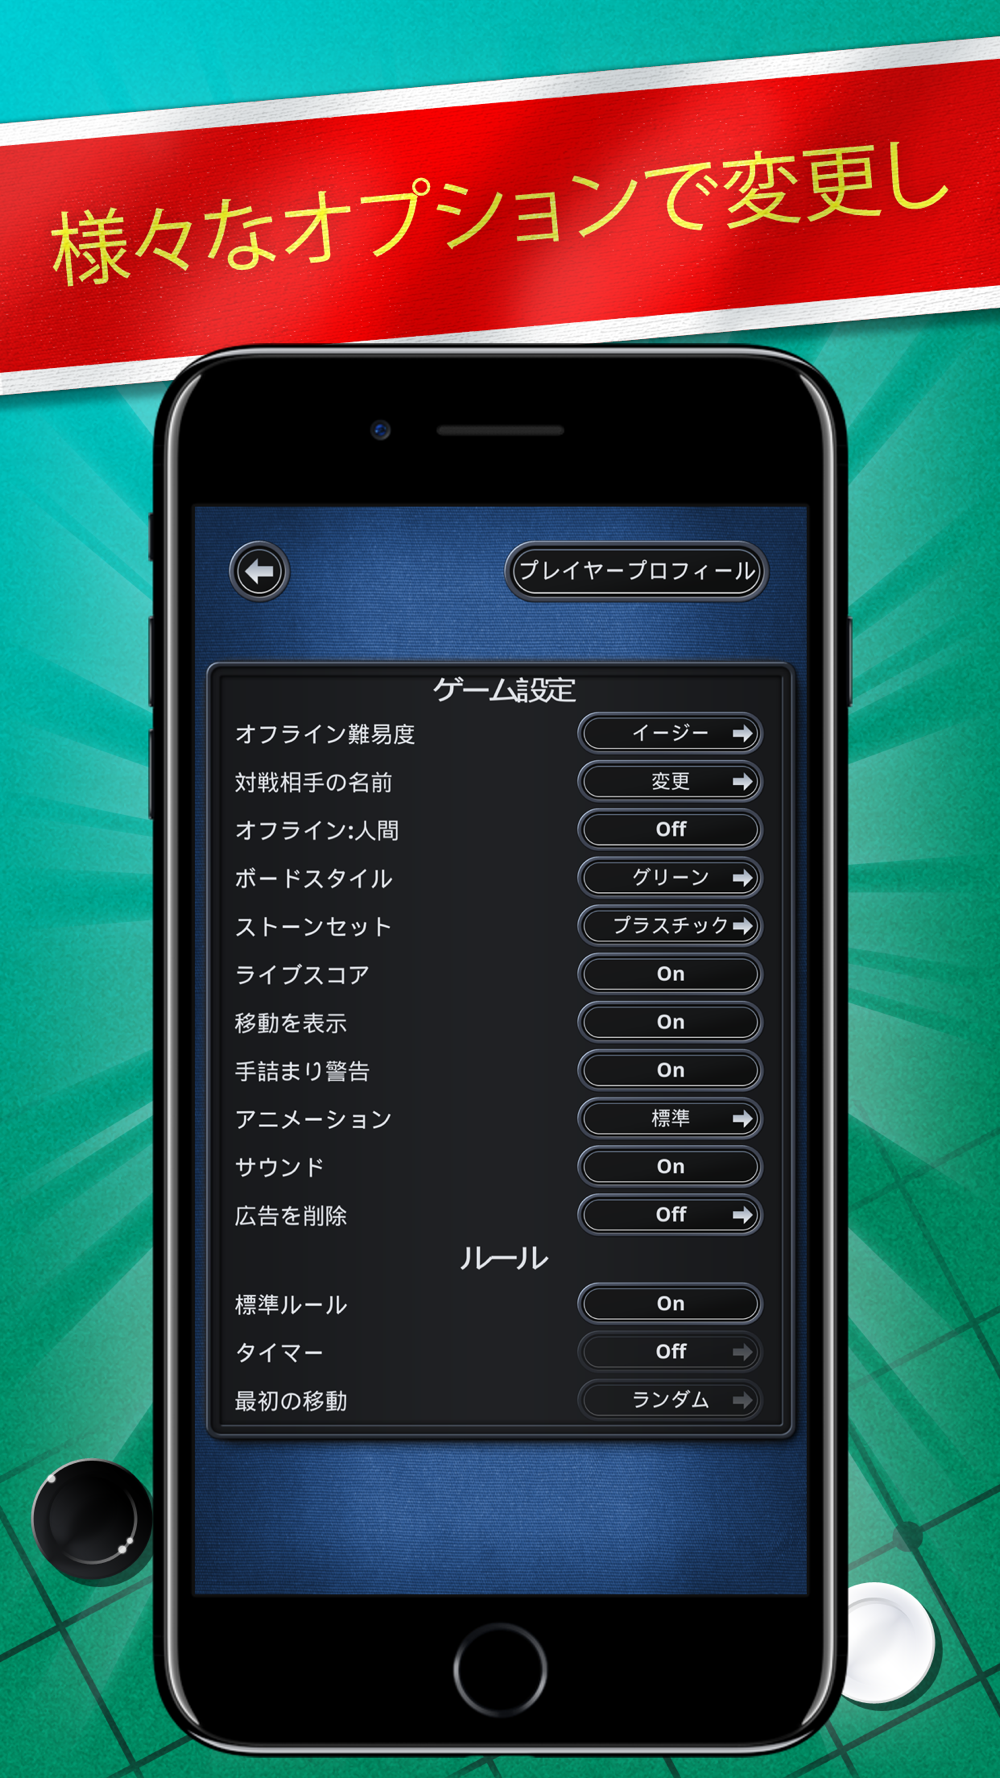 Othello オセロ ボードゲーム Free Download App For Iphone Steprimo Com